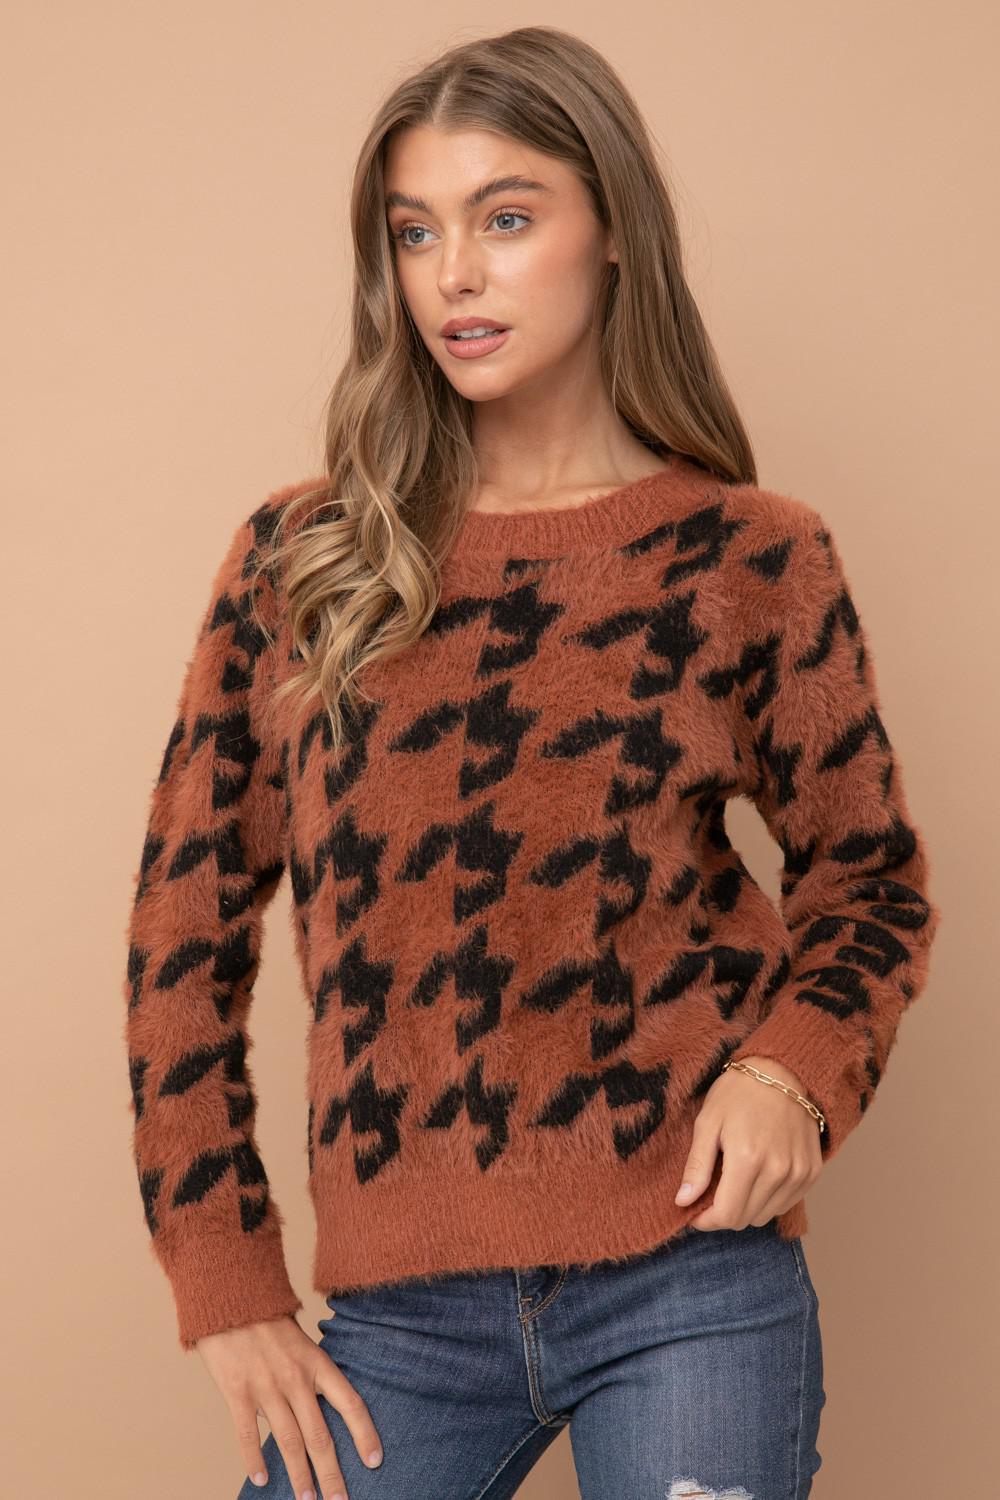 Copper Design Sweater